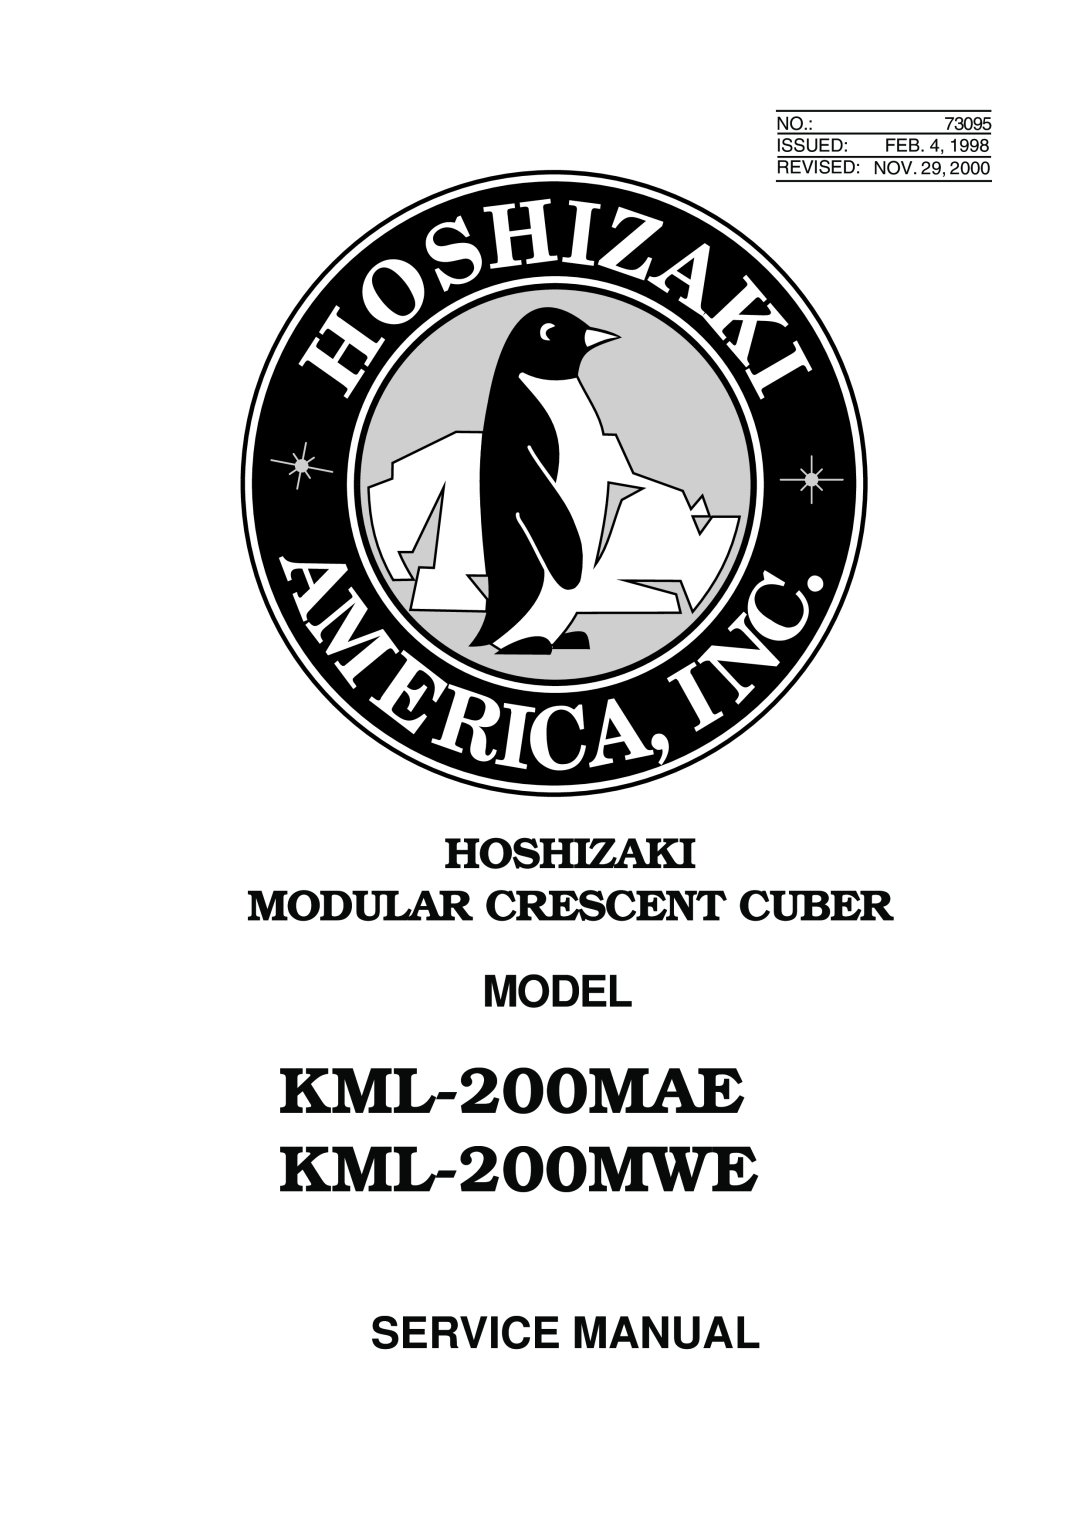 Hoshizaki service manual KML-200MAE KML-200MWE, Hoshizaki Modular Crescent Cuber, Model 